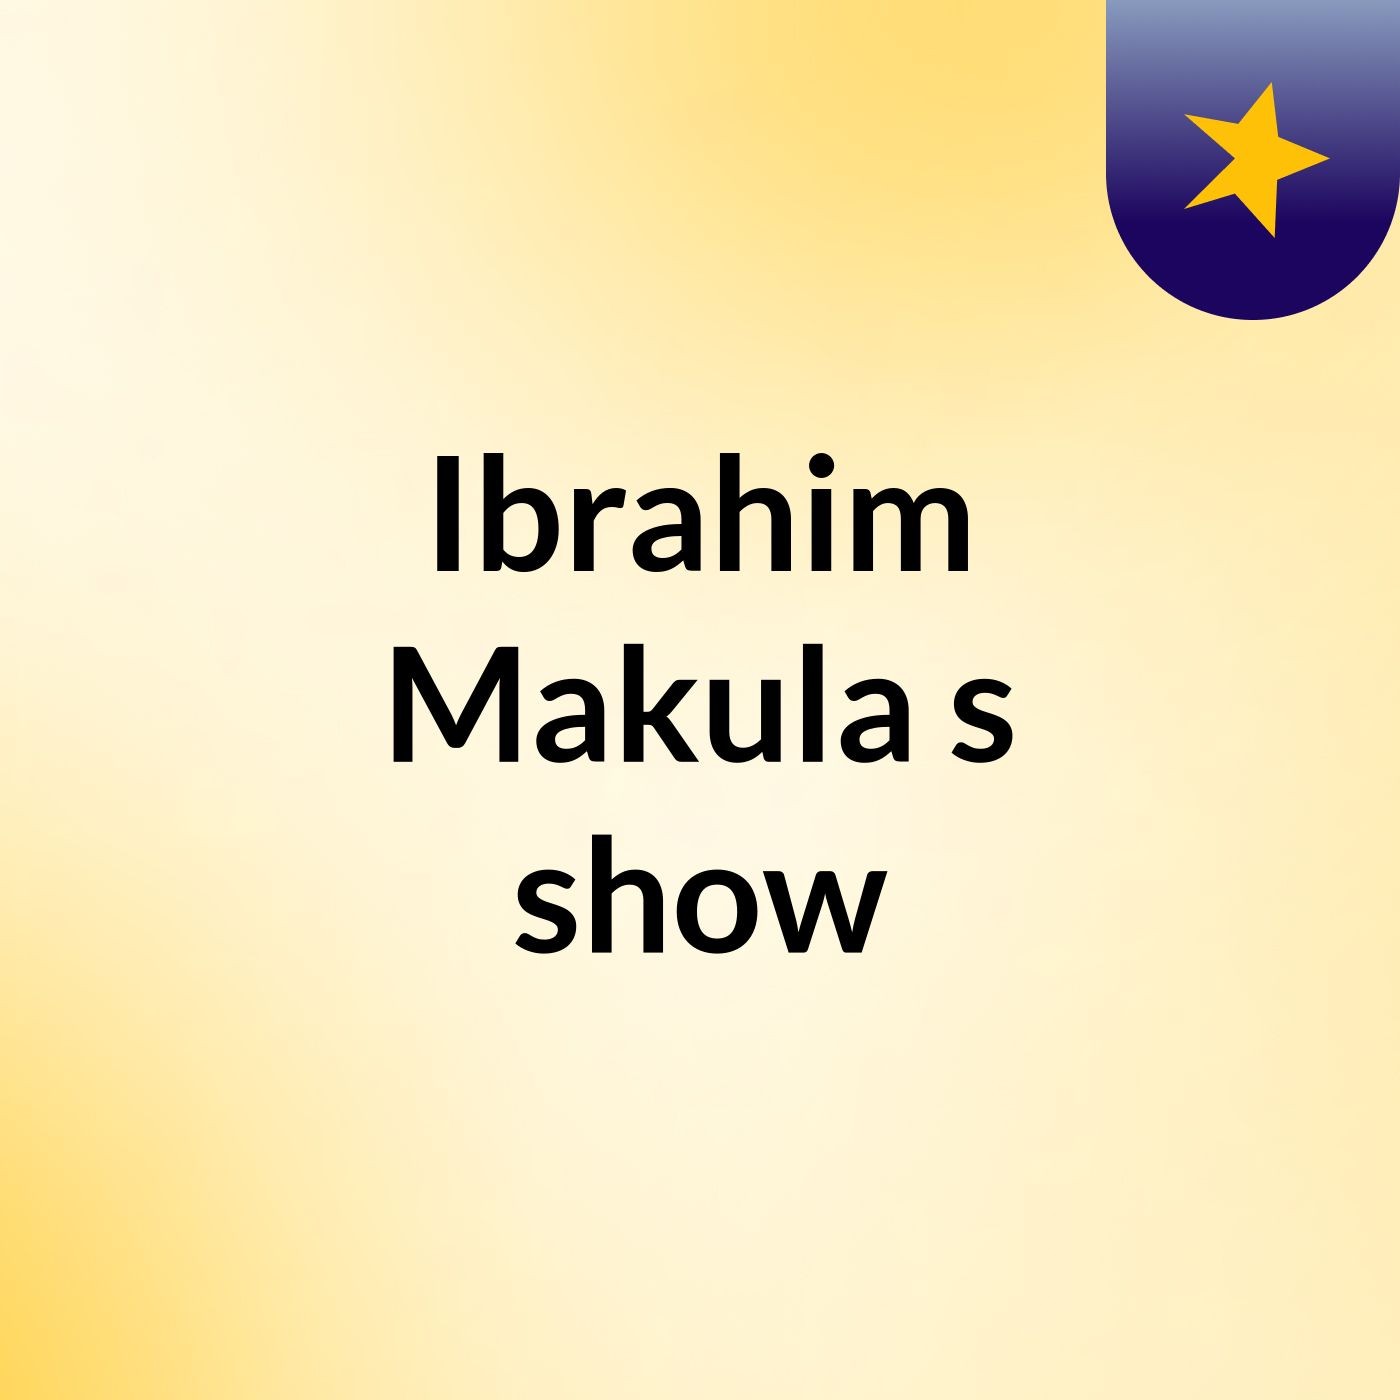 Ibrahim Makula's show